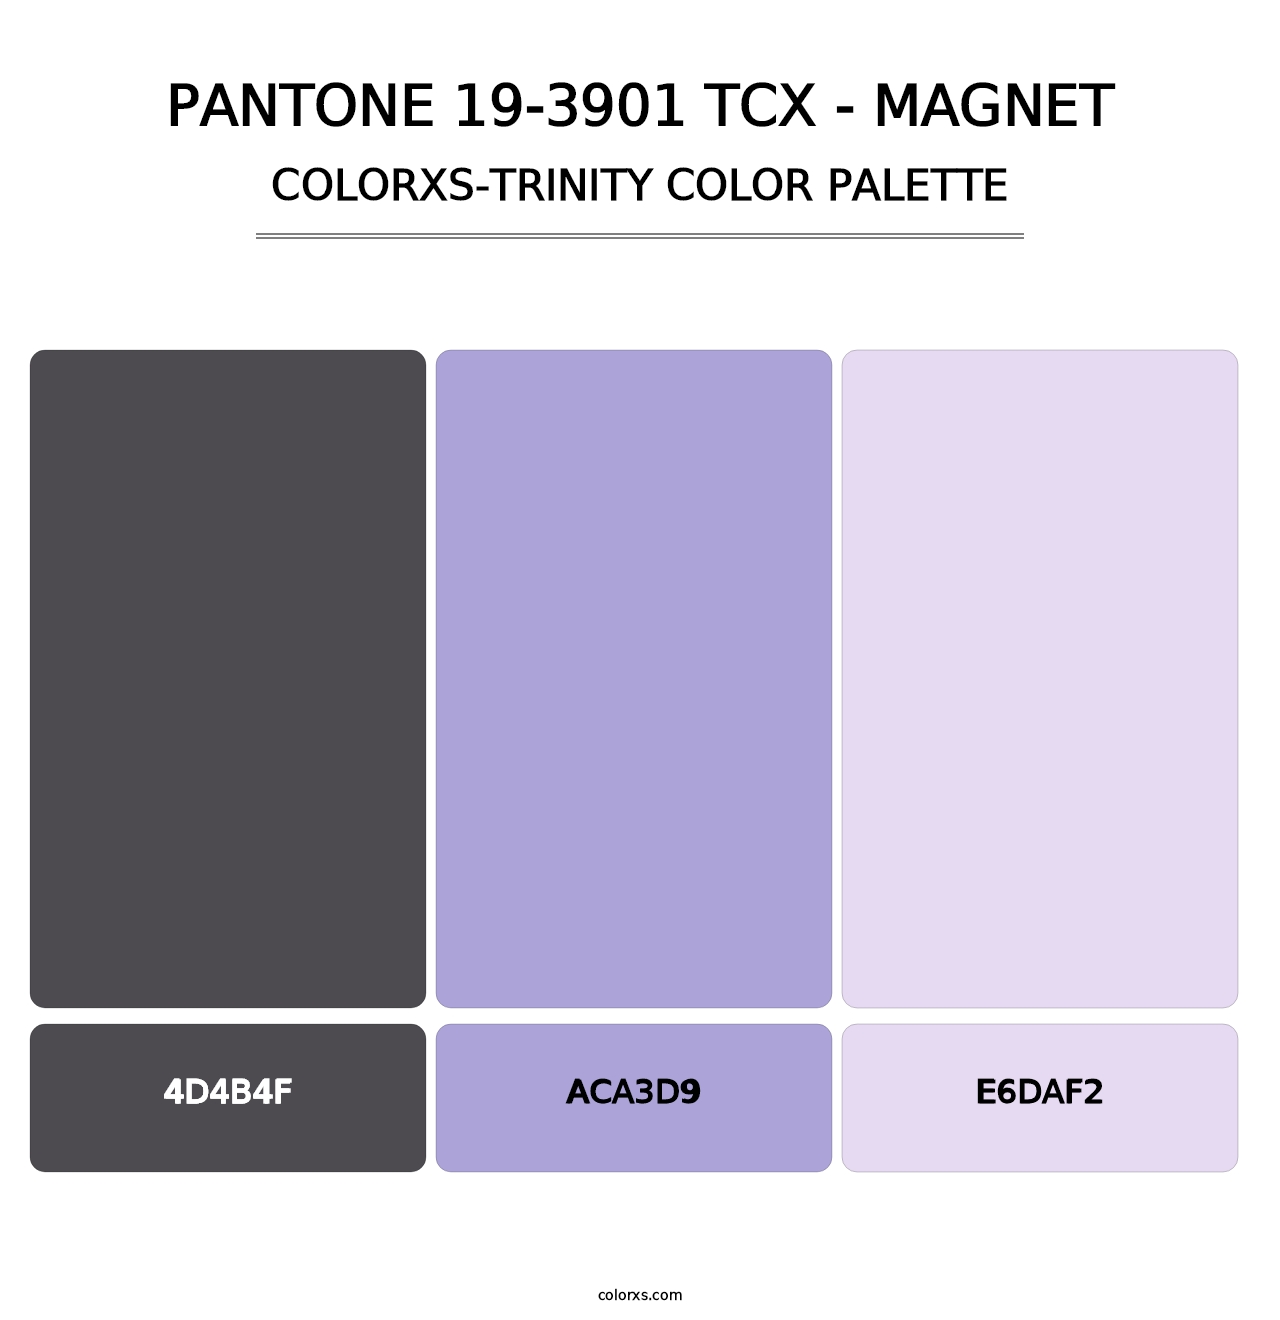 PANTONE 19-3901 TCX - Magnet - Colorxs Trinity Palette